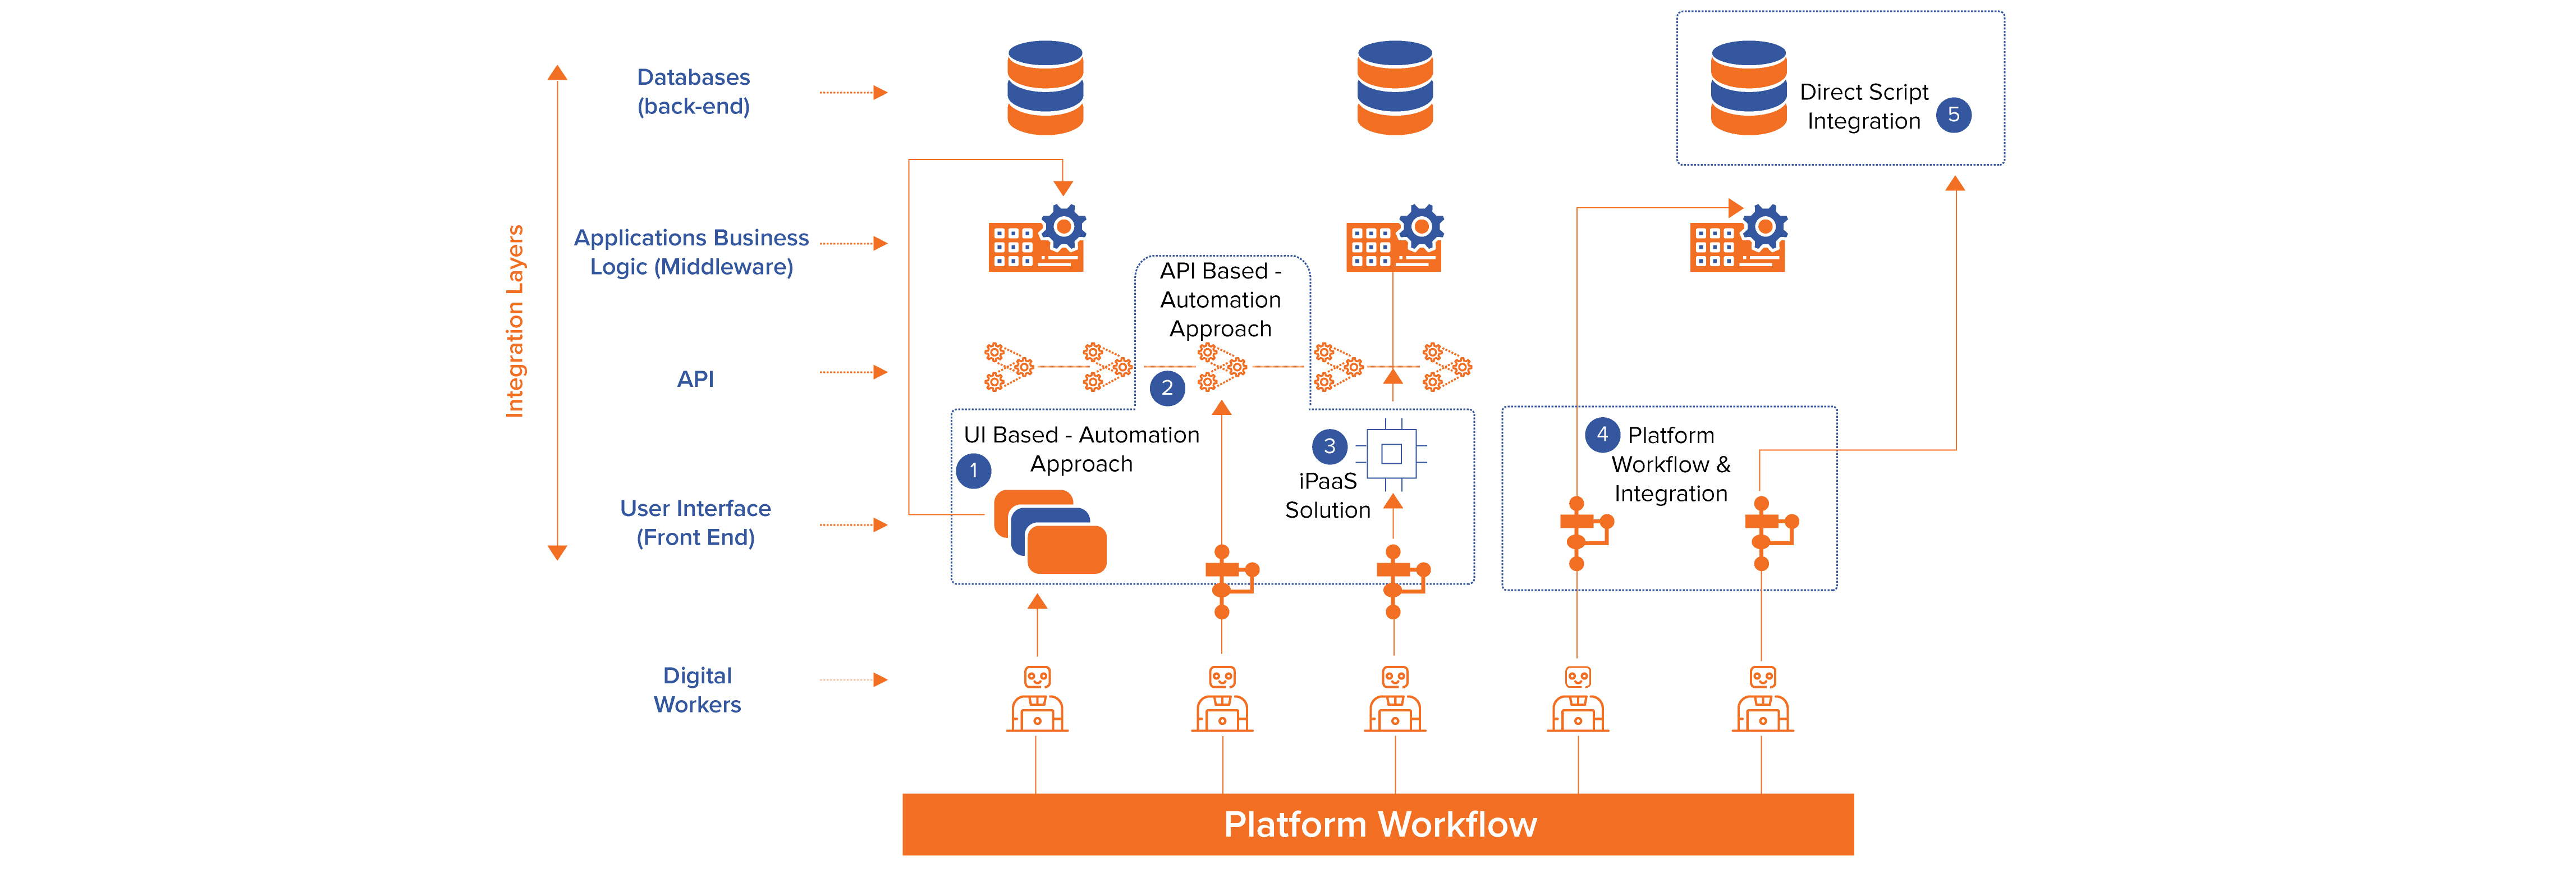 Hyperautomation technology framework and platform workflow